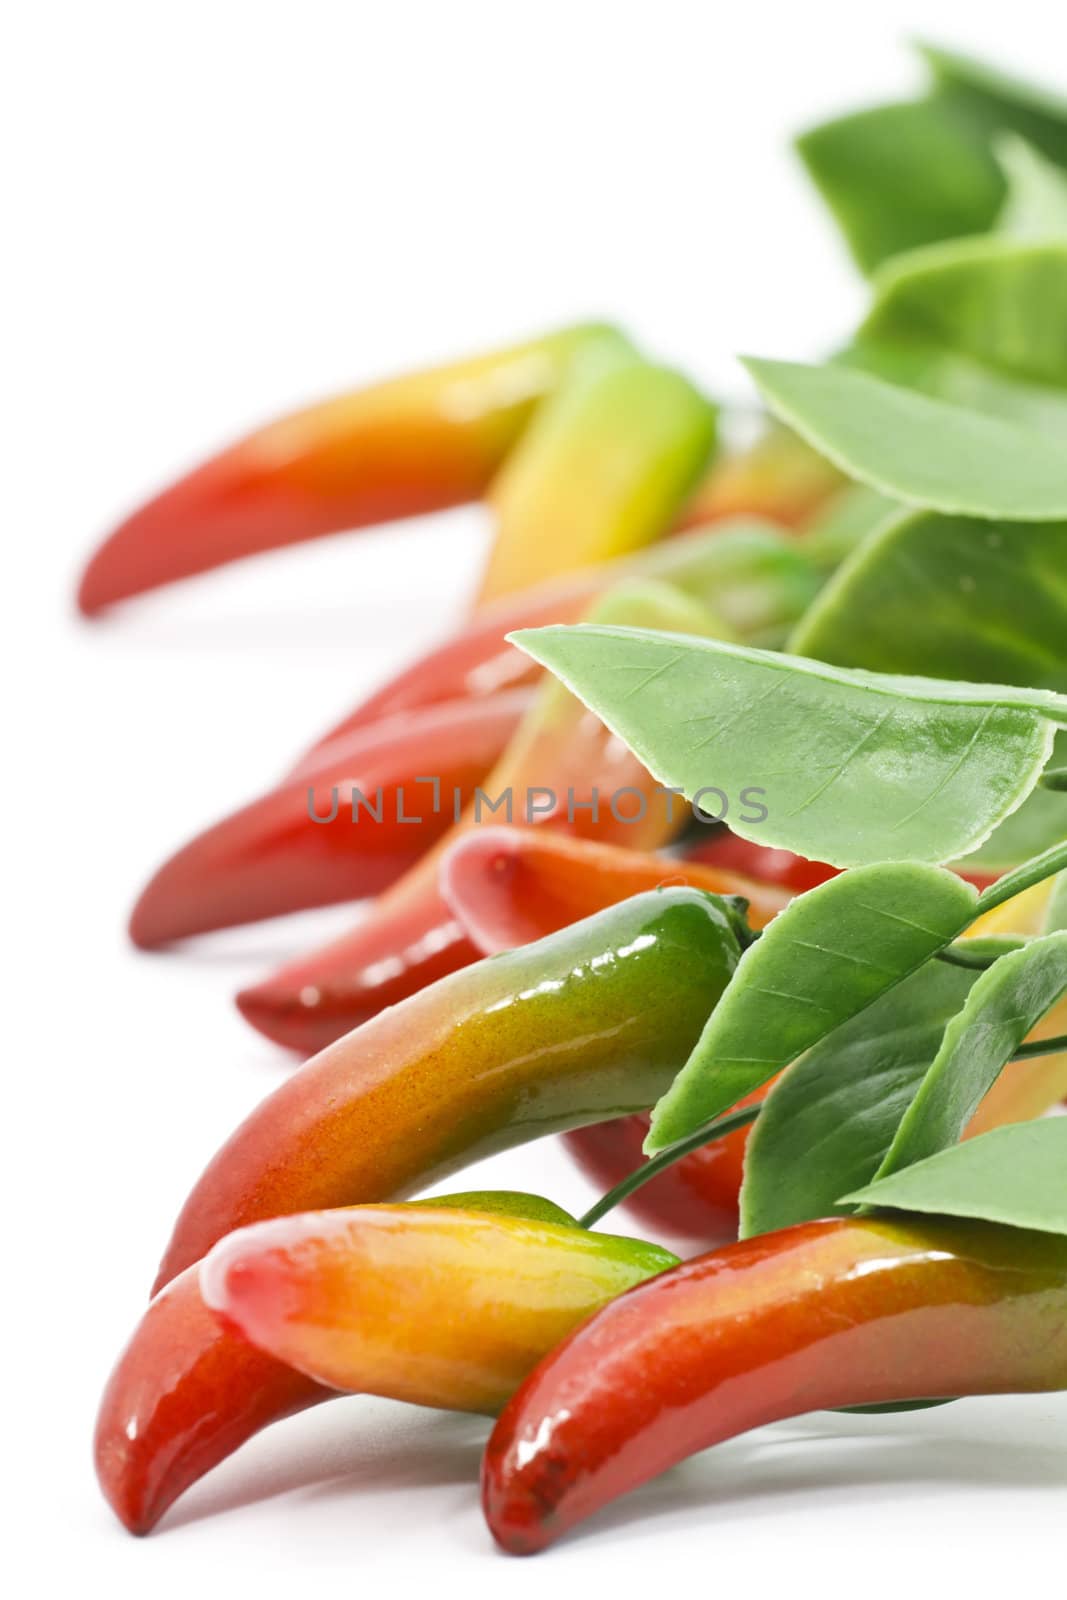 Chilli peppers by Nikolaniko